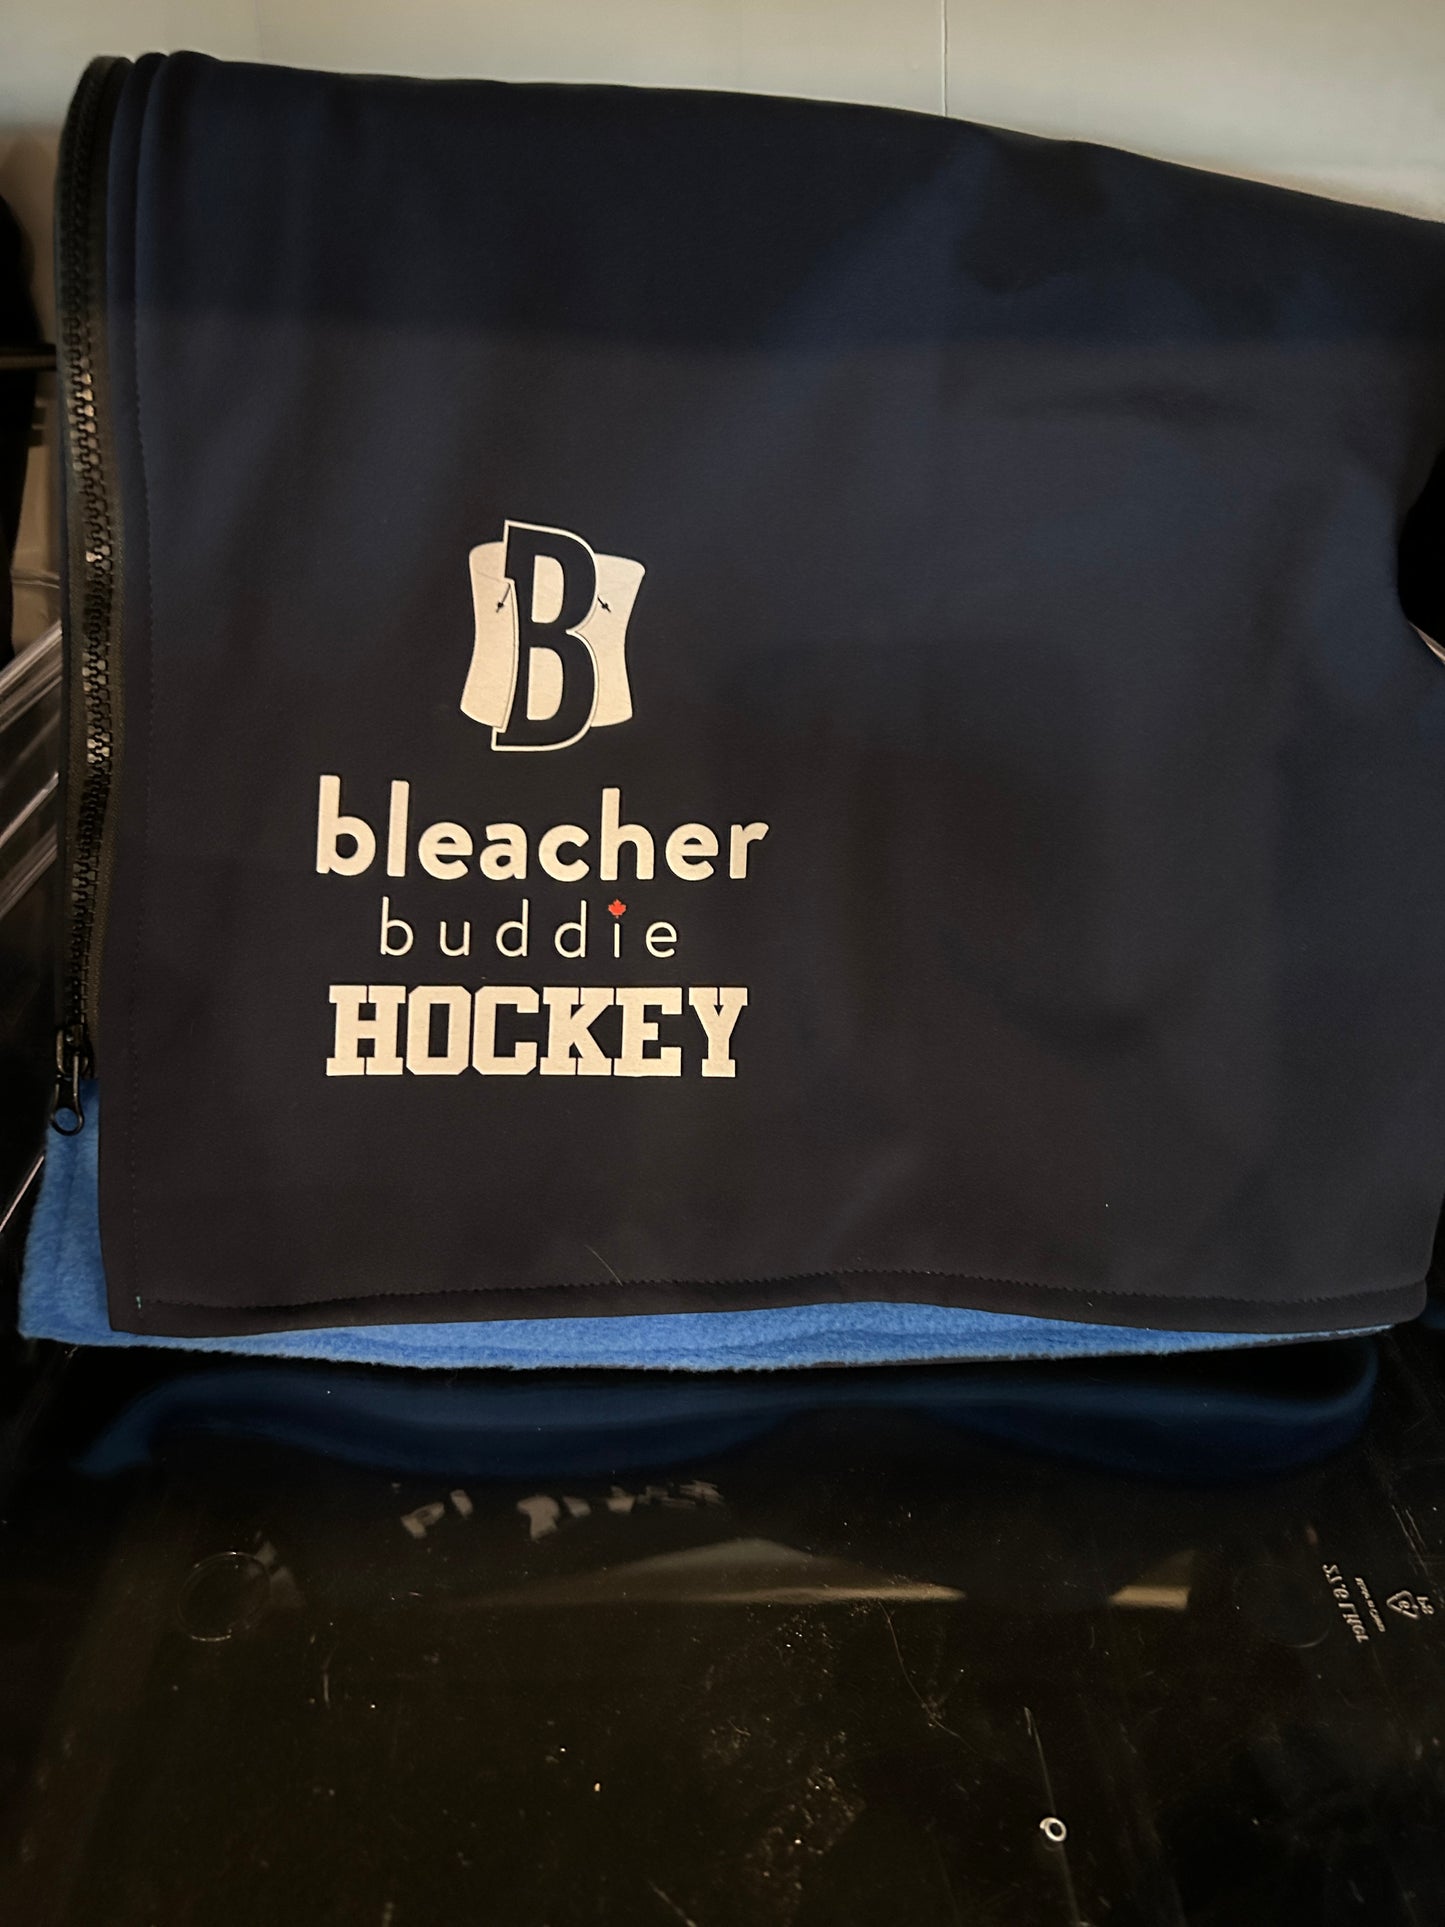 Hockey Mom Bleacher Buddie